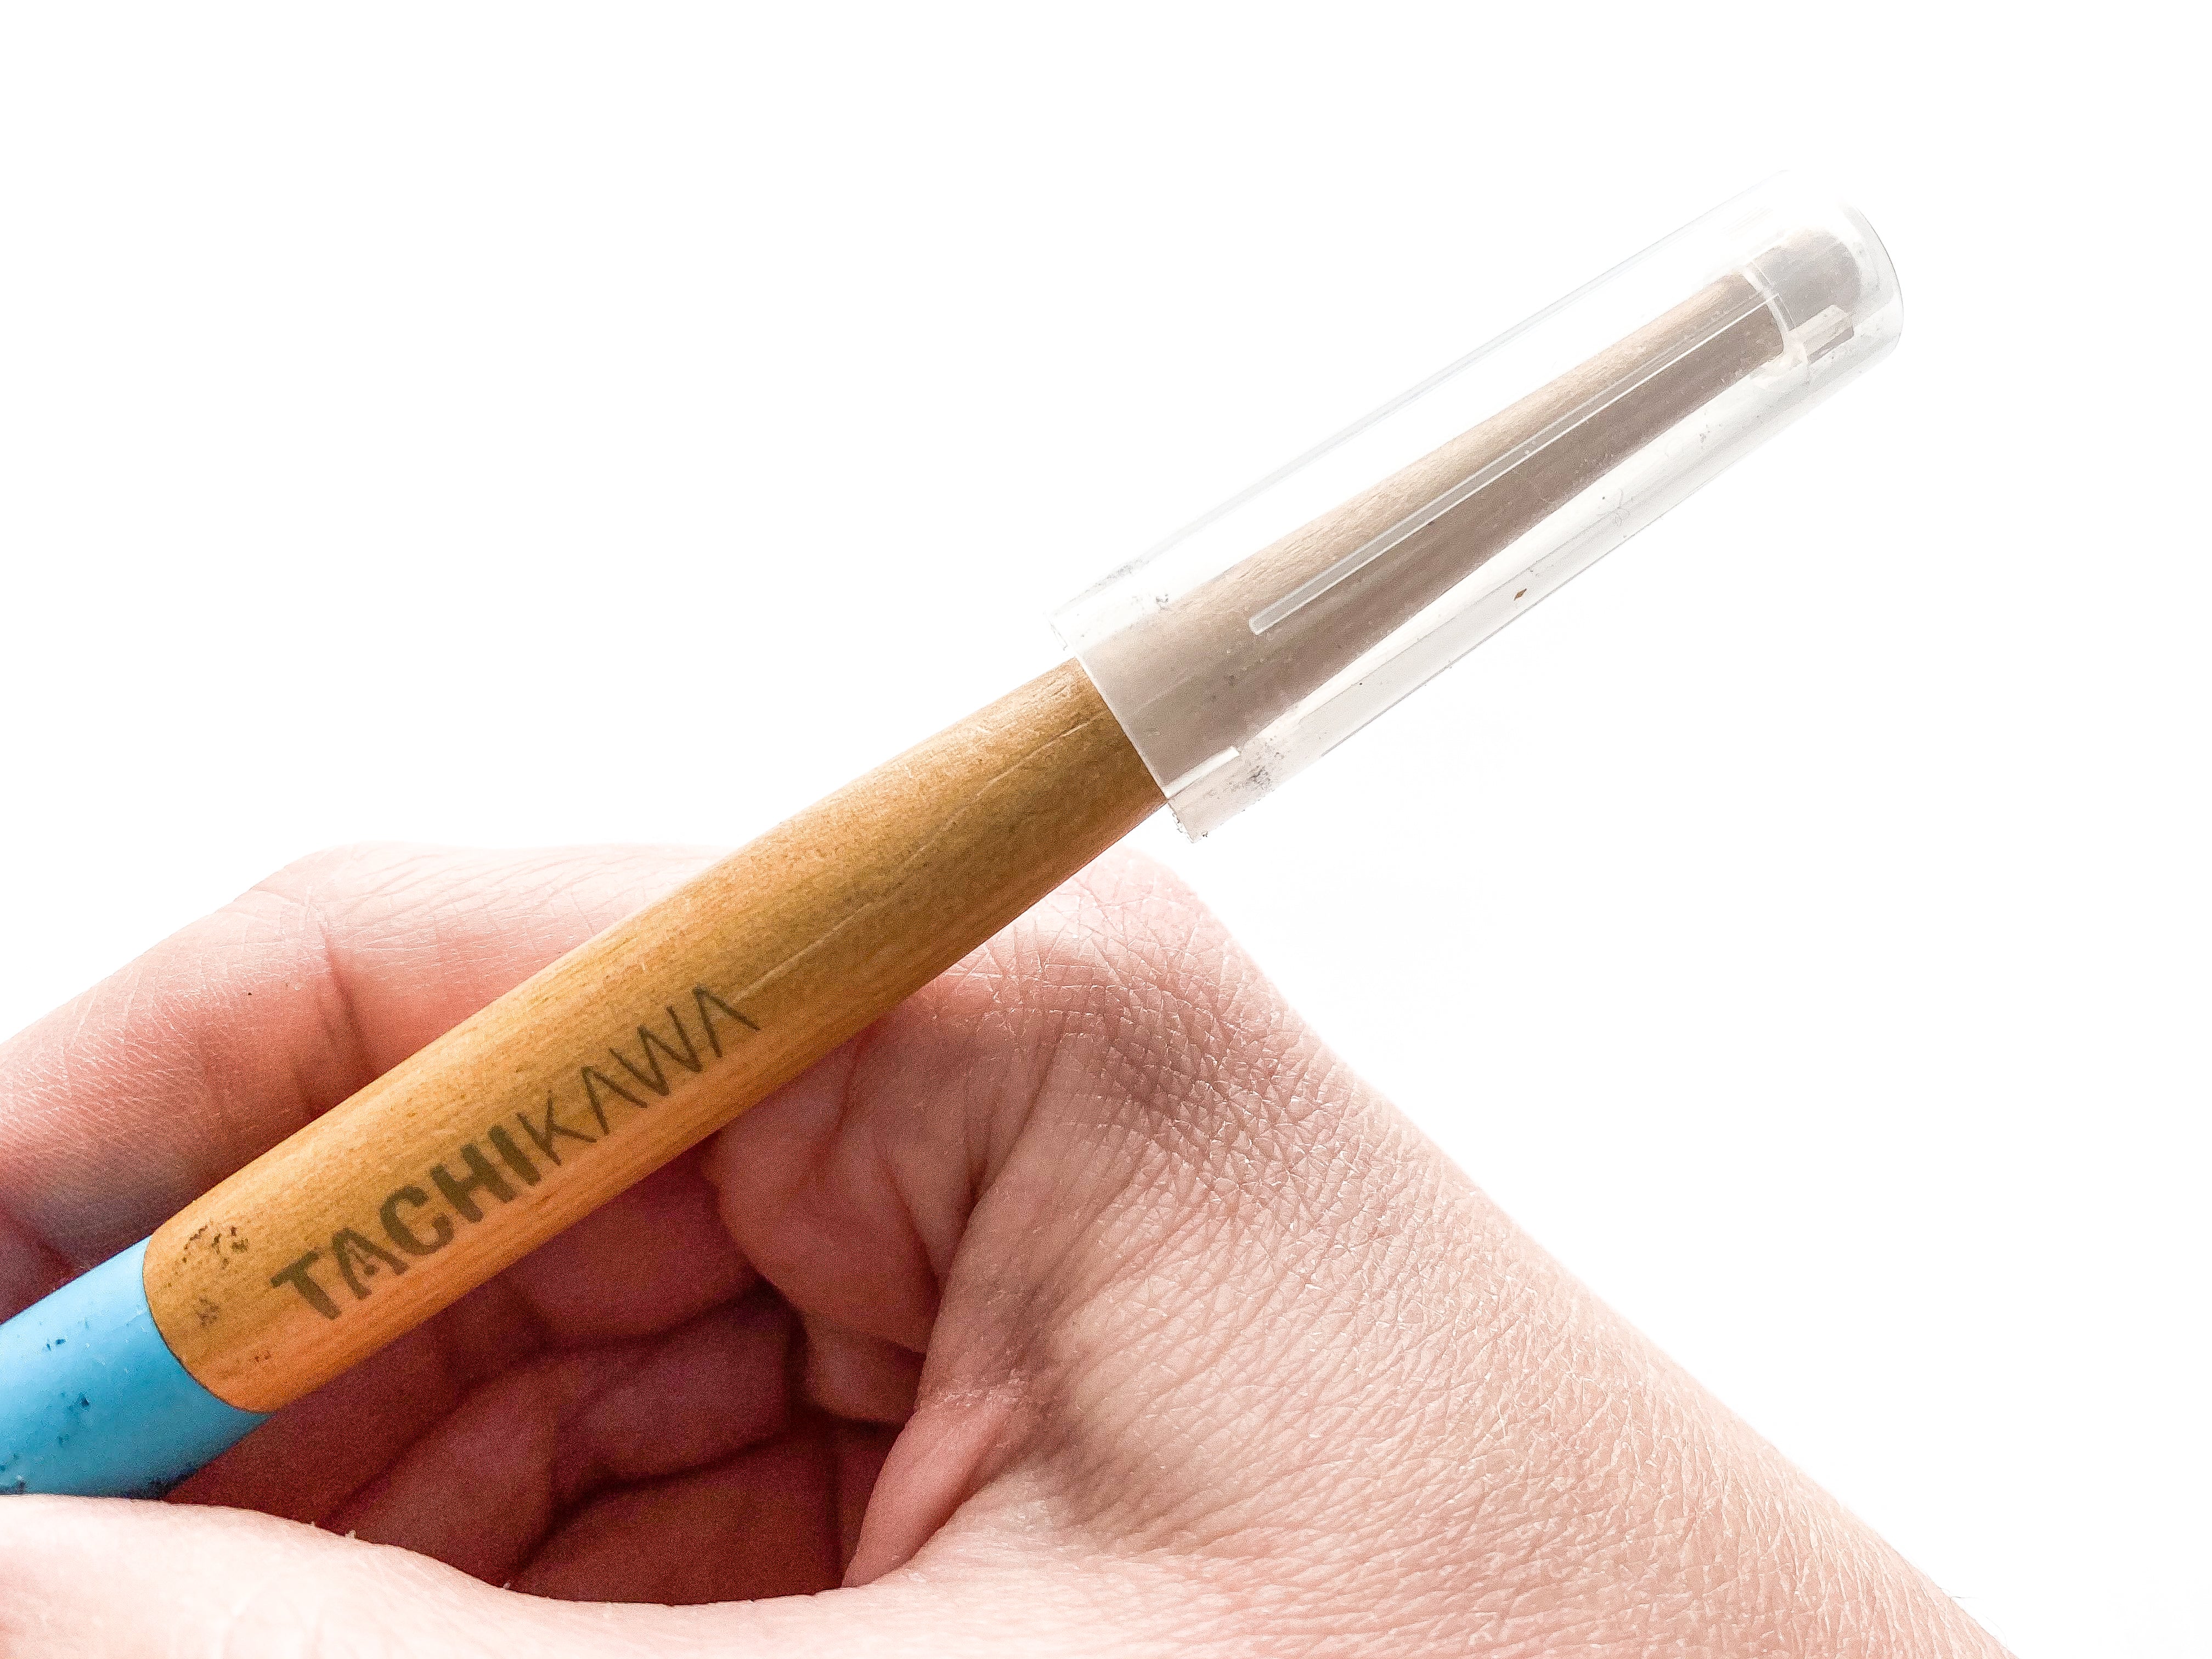  Tachikawa Comic Pen Nib Holder, Model 40 (T-40) : Fountain  Pens : Office Products